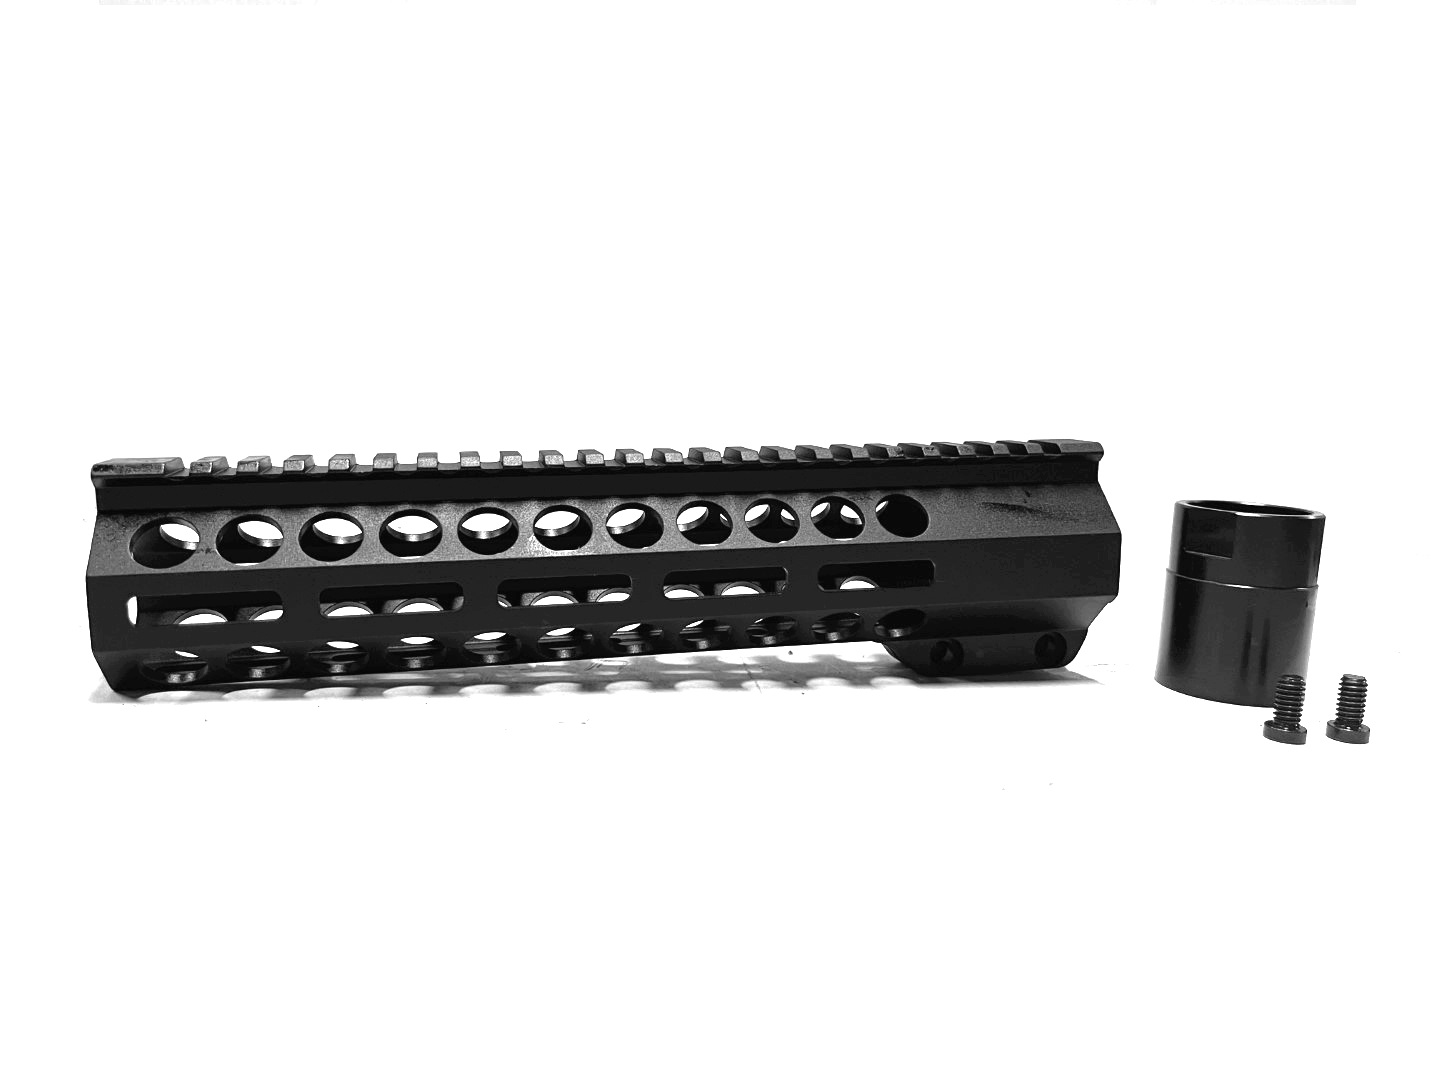 Polymer 80 PF45 80% Large Pistol Frame Kit - Black